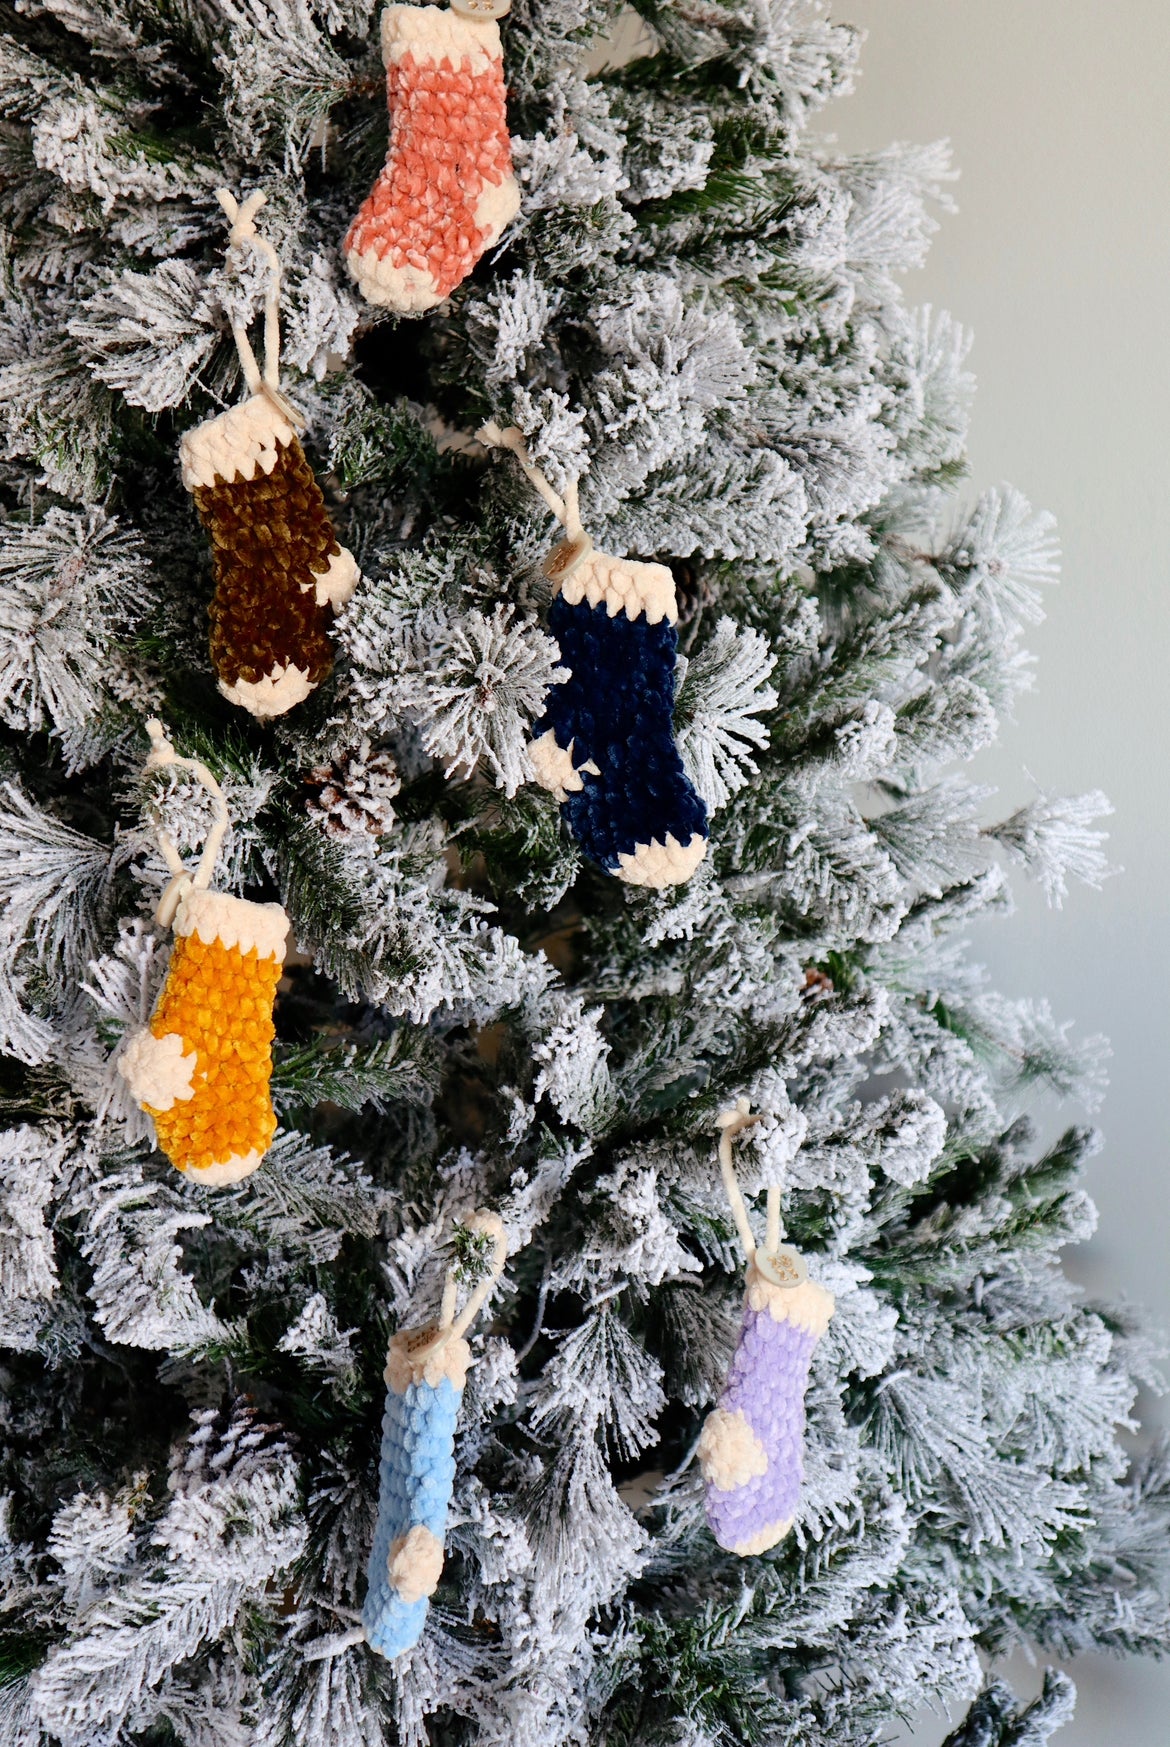 Mini Stocking Ornaments